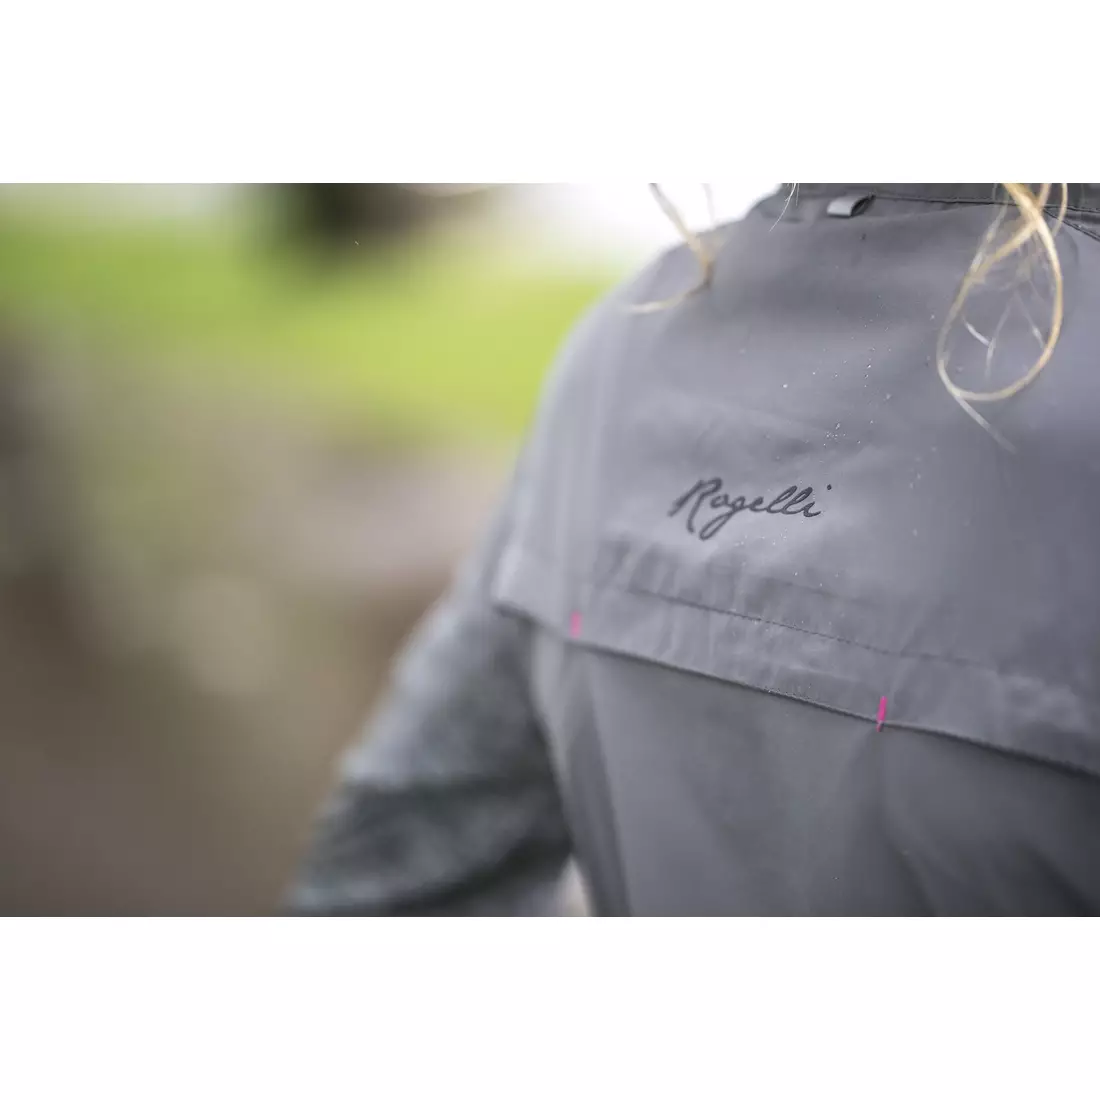 ROGELLI RUN SAMANTA 840.861 - women's running windbreaker jacket, gray and pink